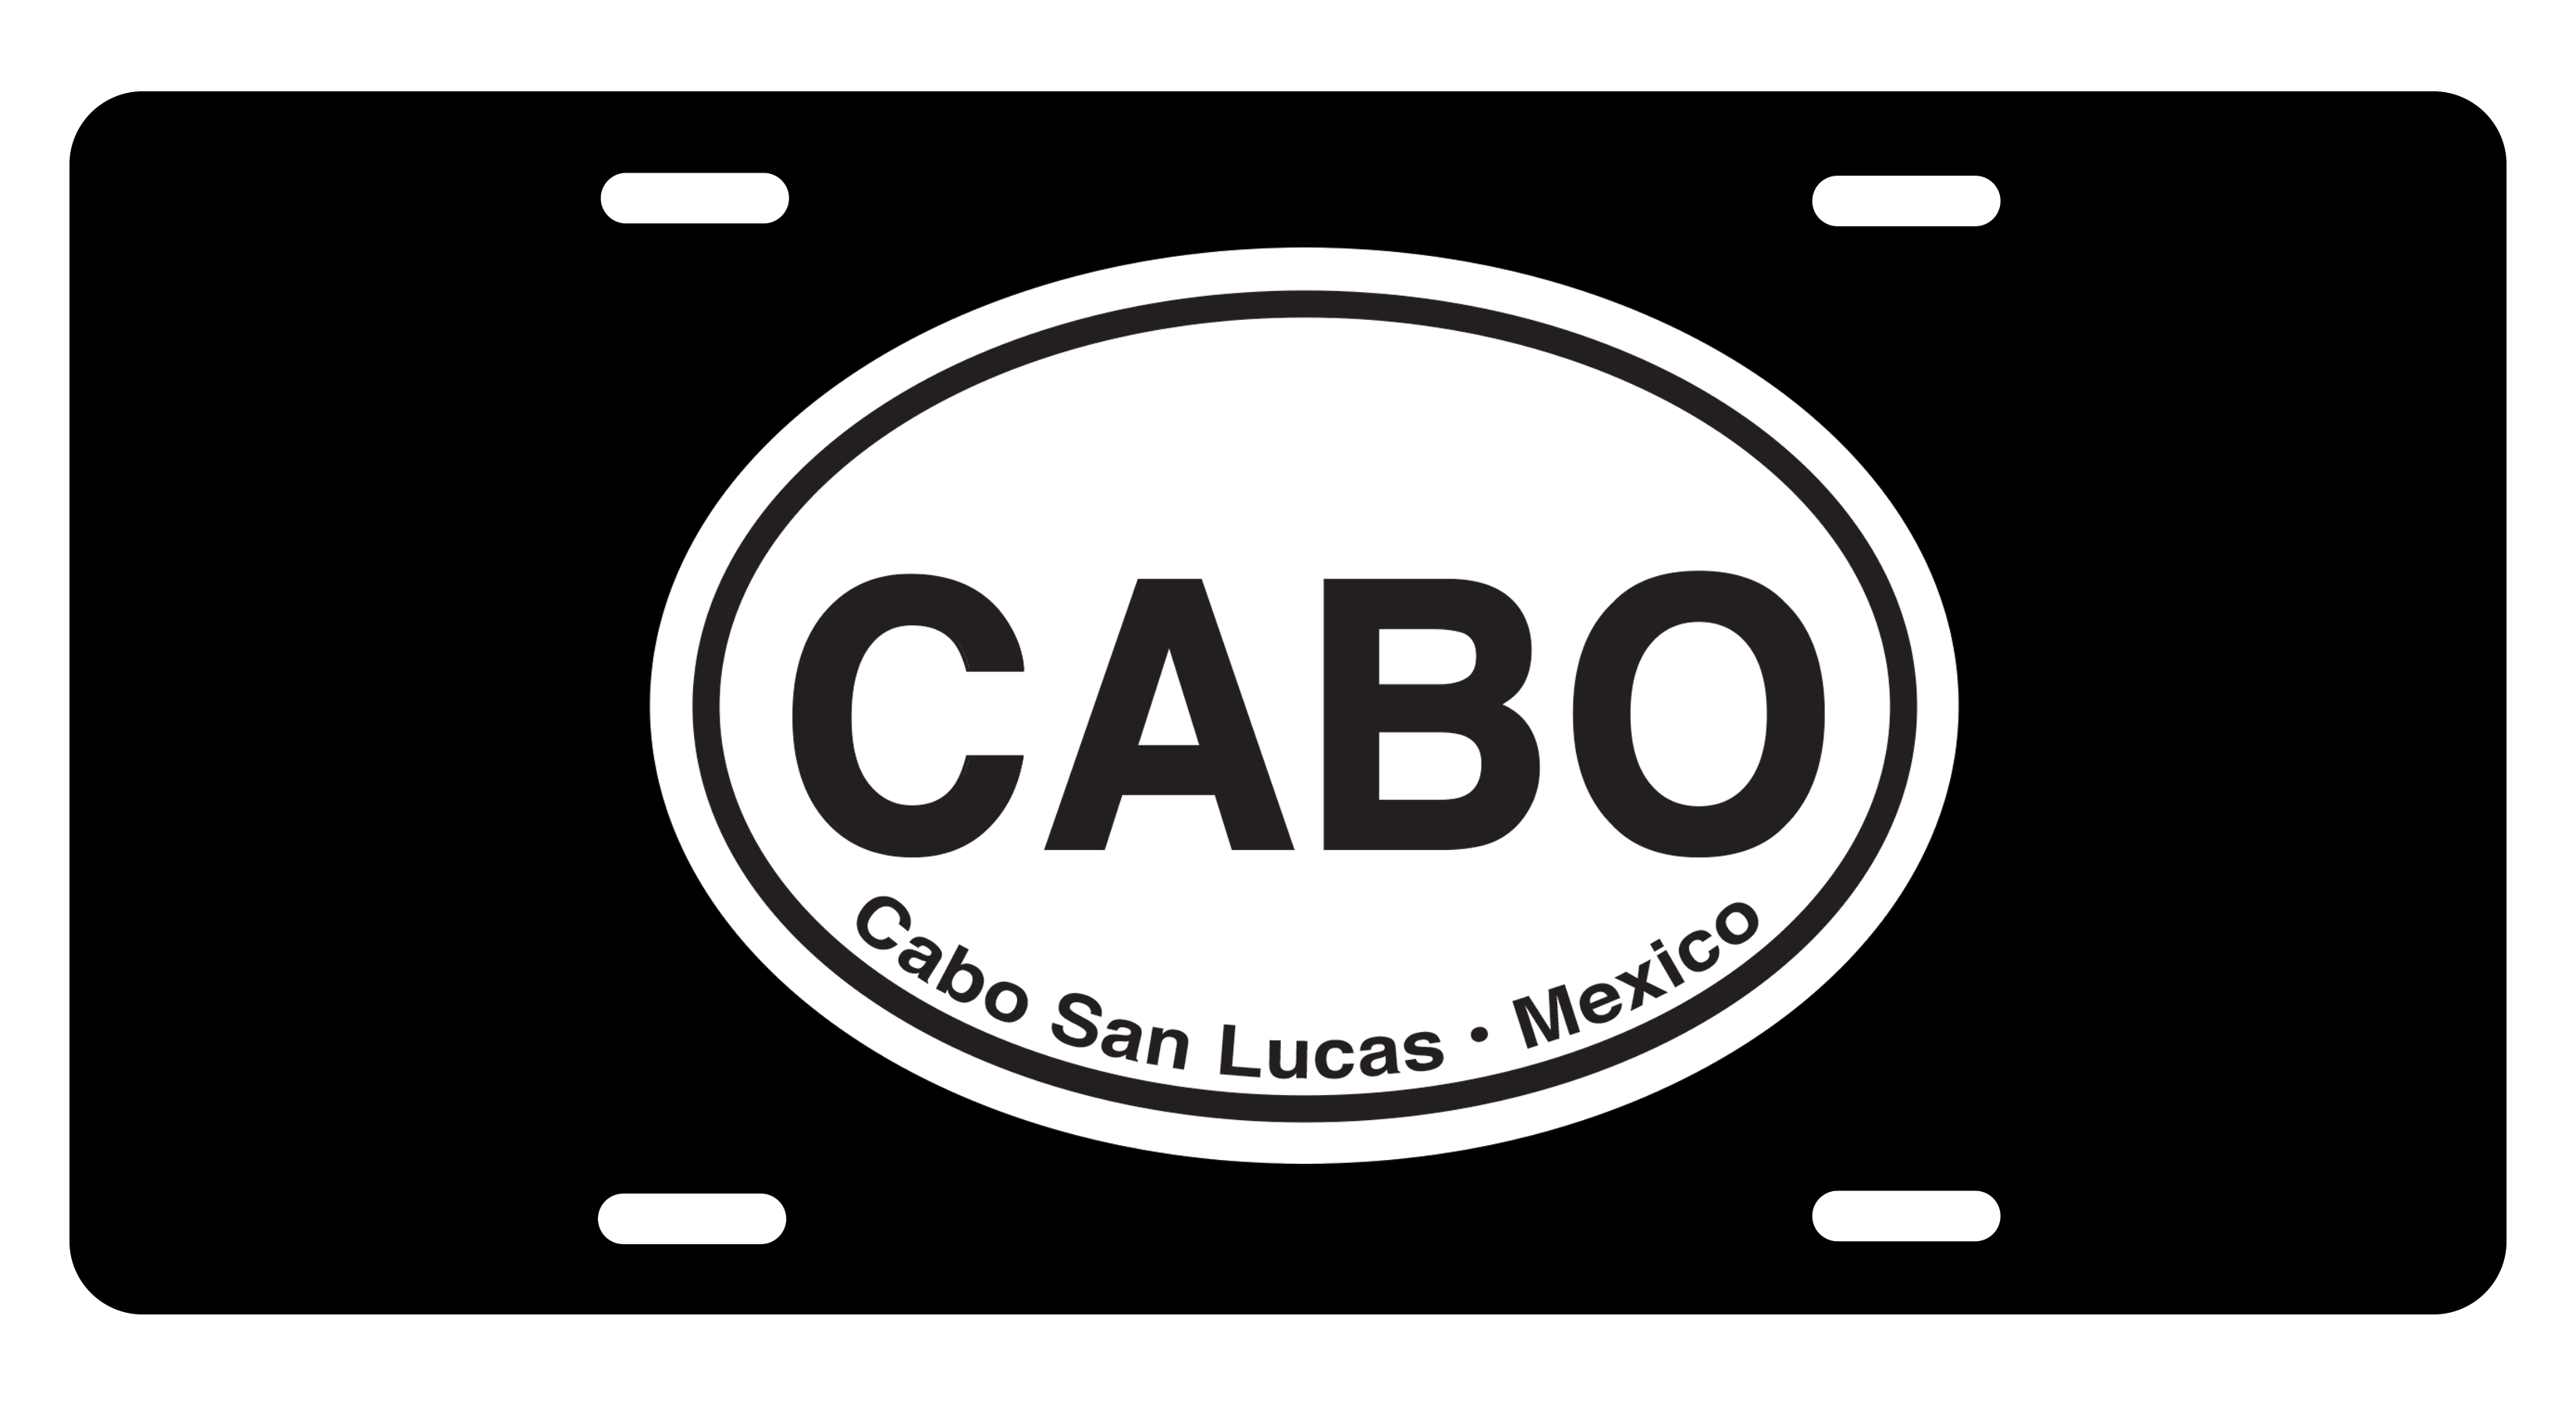 Cabo License Plates - My Destination Location